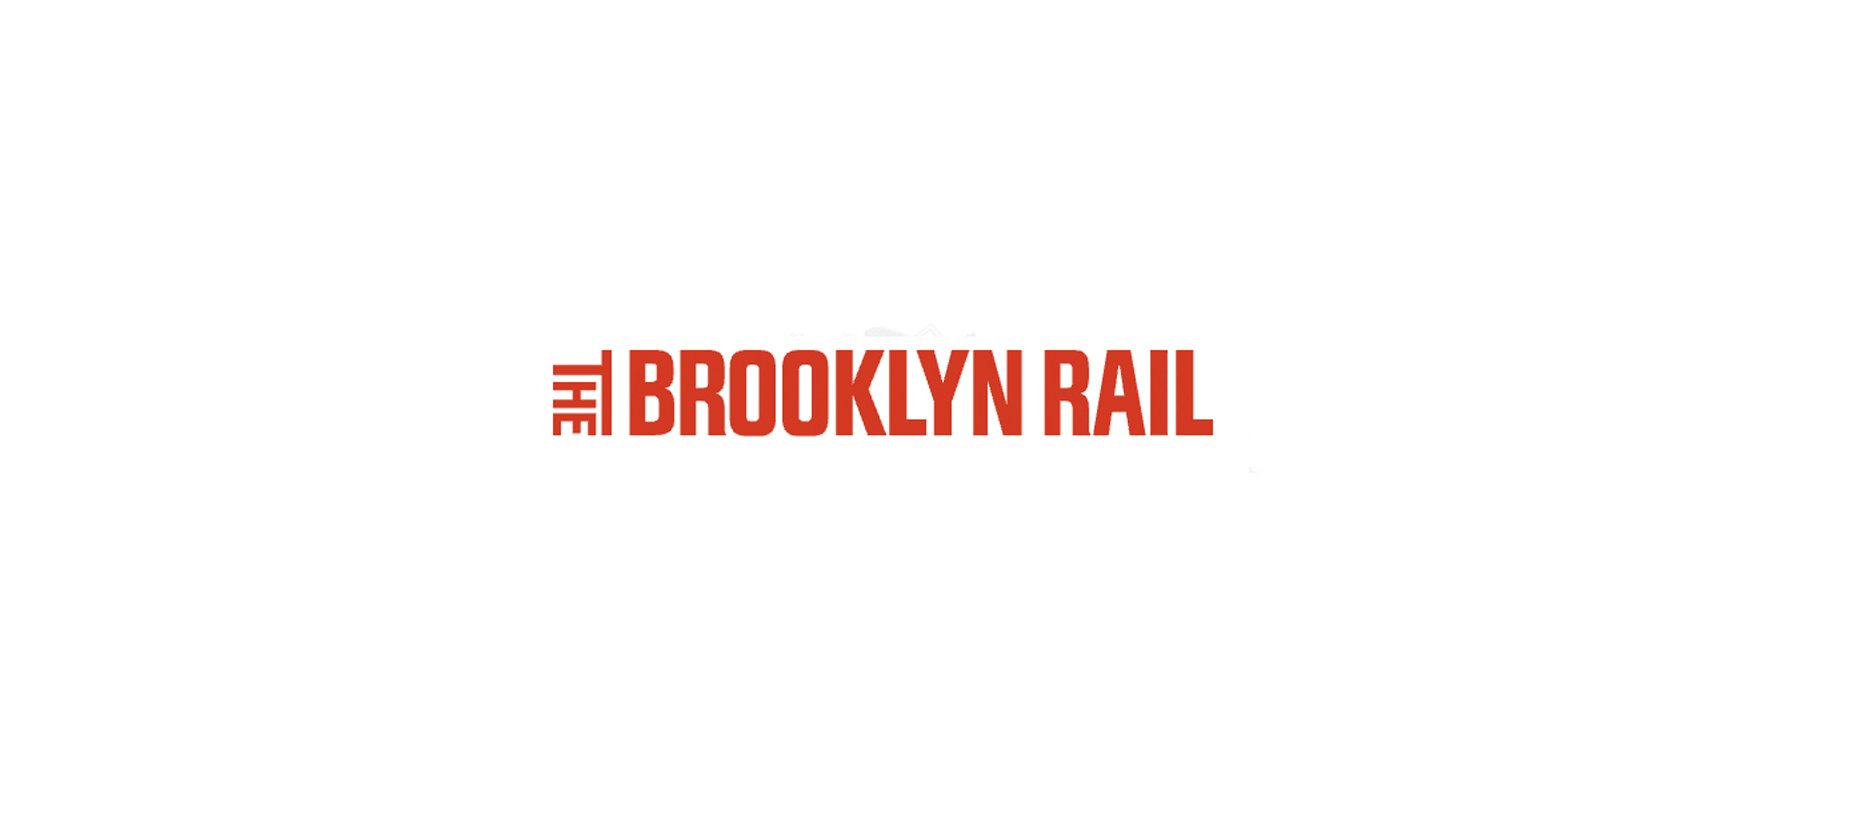 Brooklyn Rail_Large.jpg